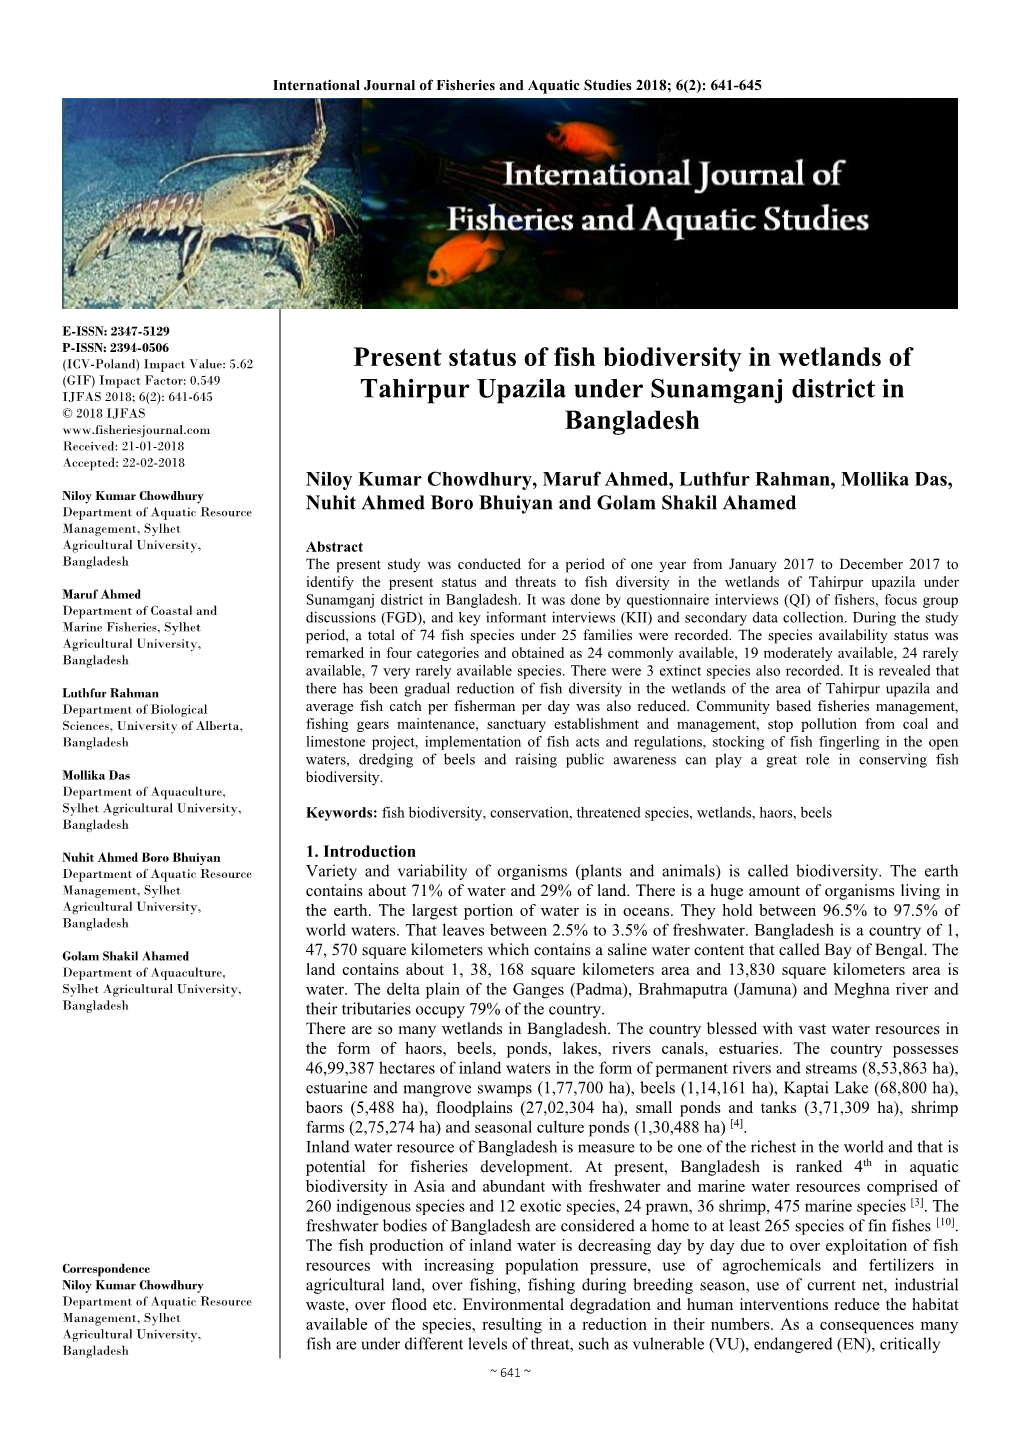 Present Status of Fish Biodiversity in Wetlands of Tahirpur Upazila Under